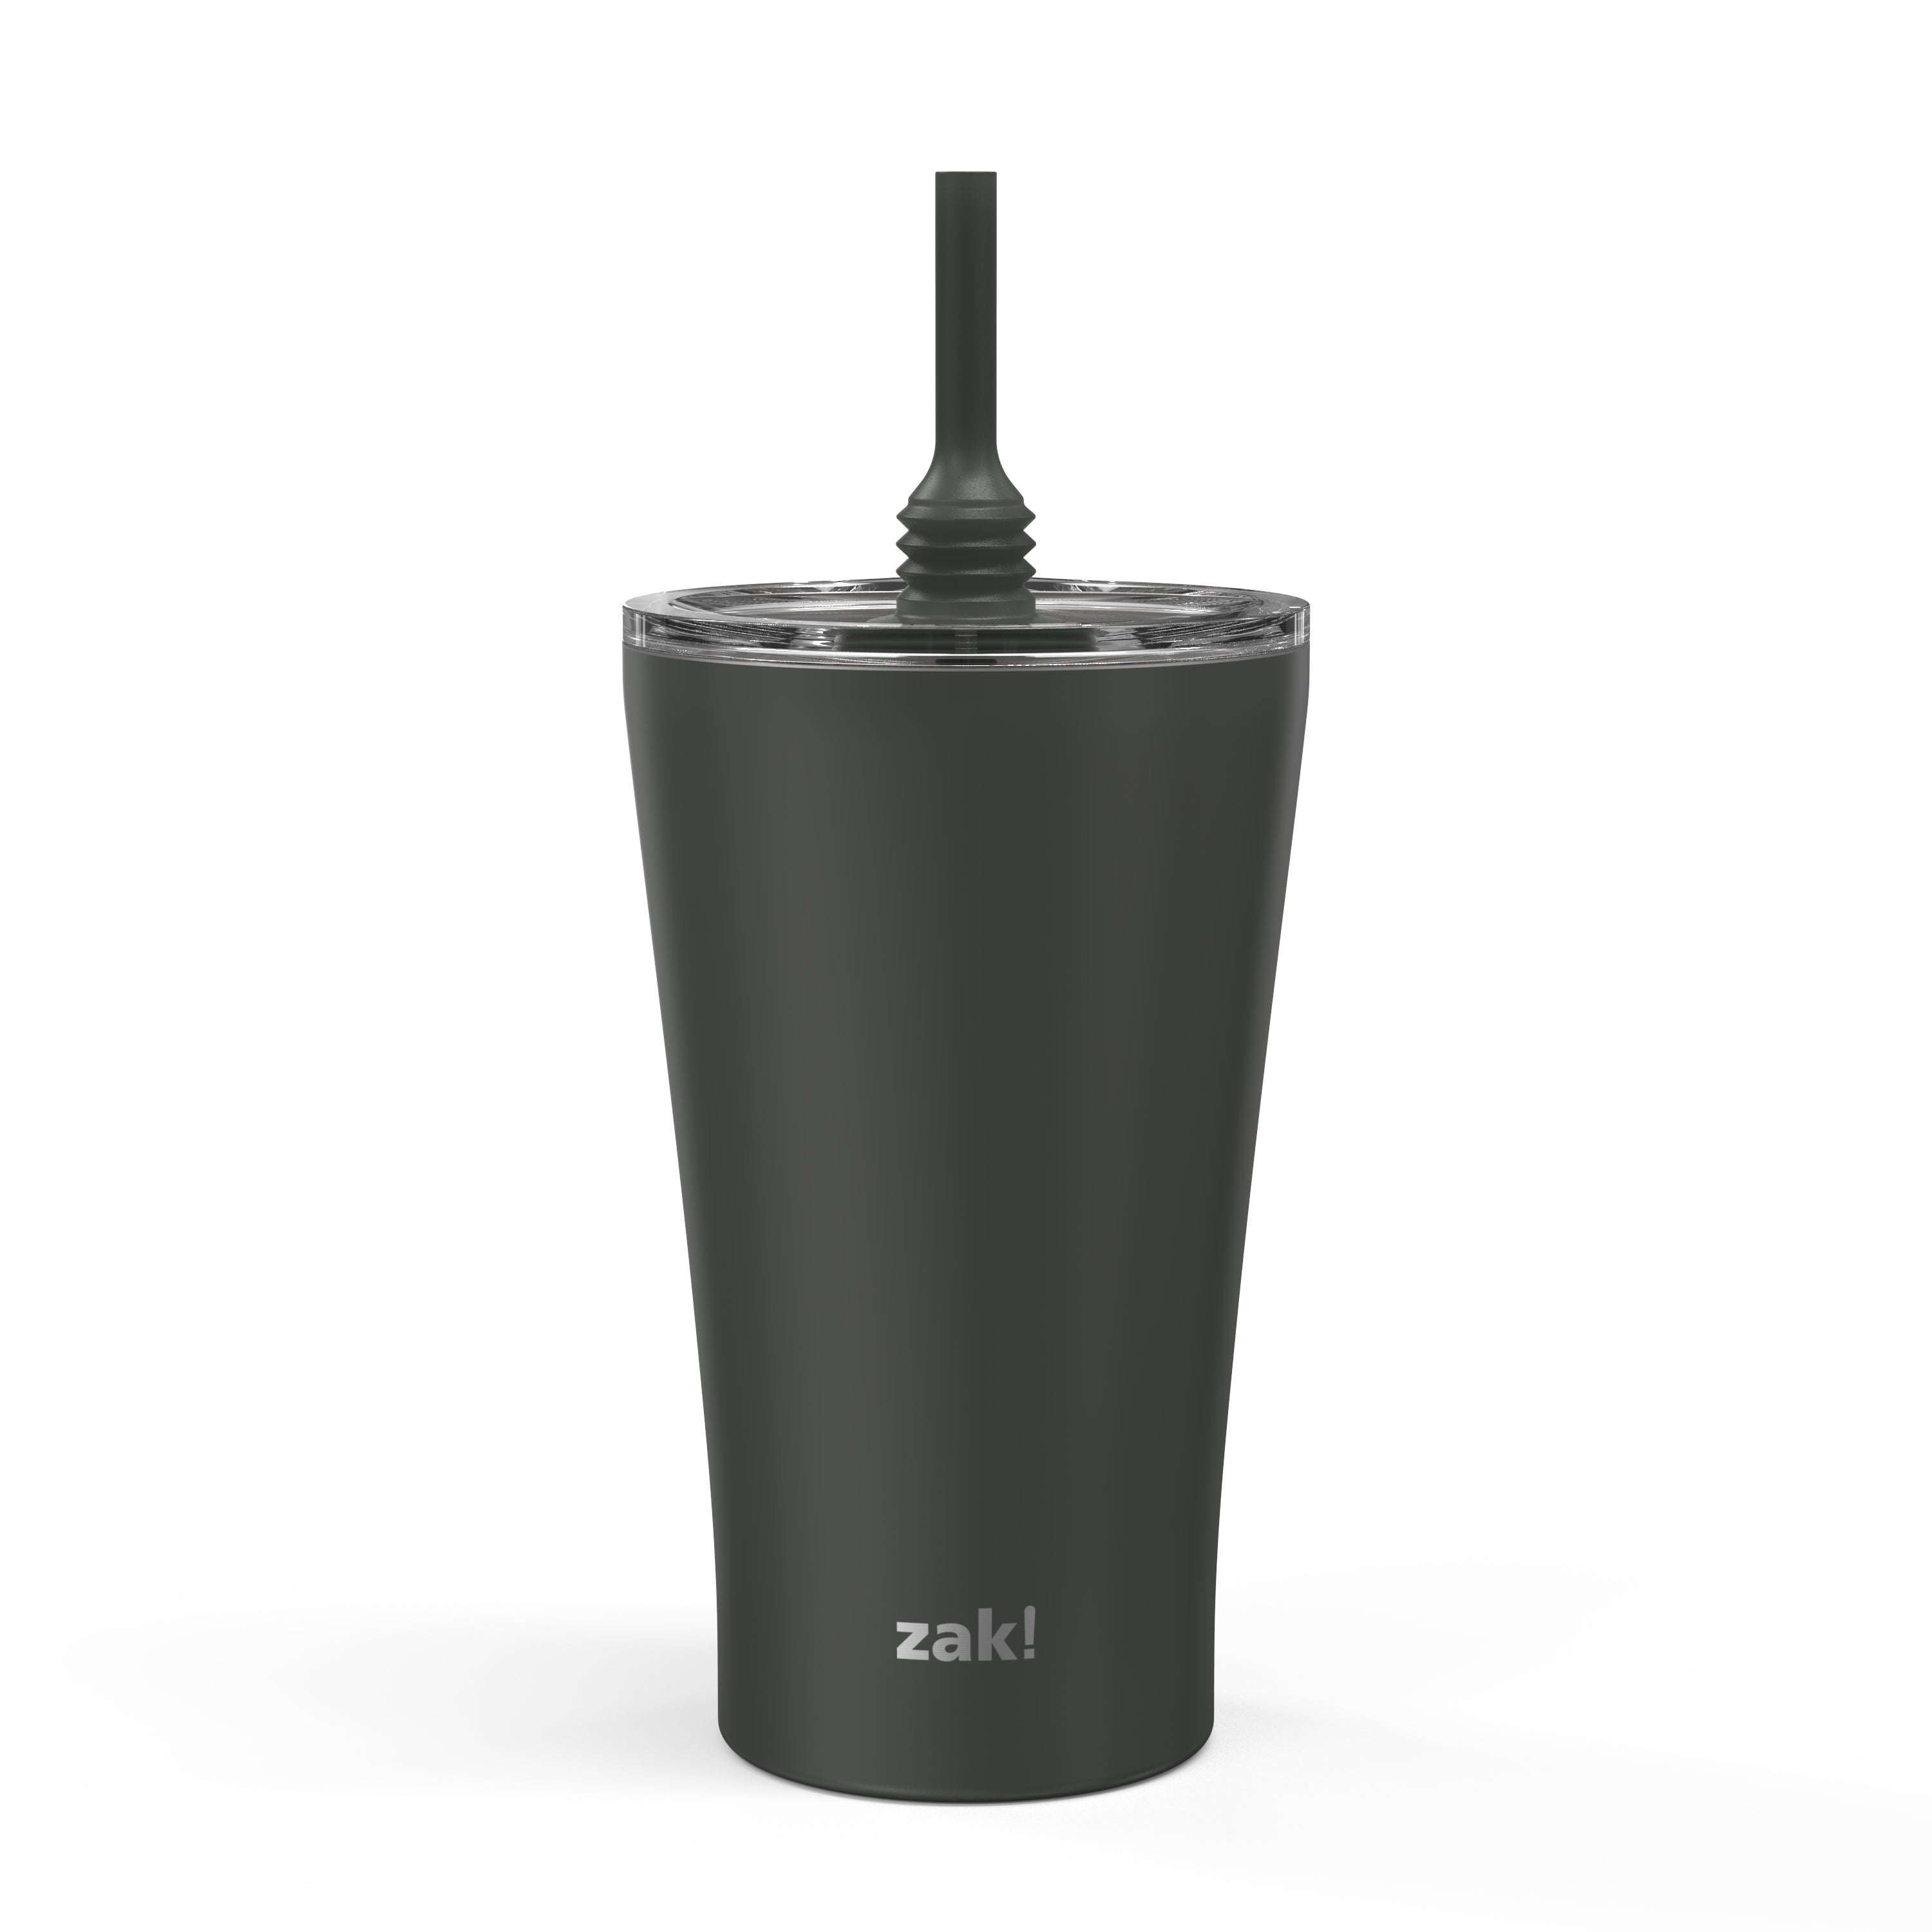 Zak! Designs 20oz. Insulated Tumbler Stainless Steel Black BPA Free NEW